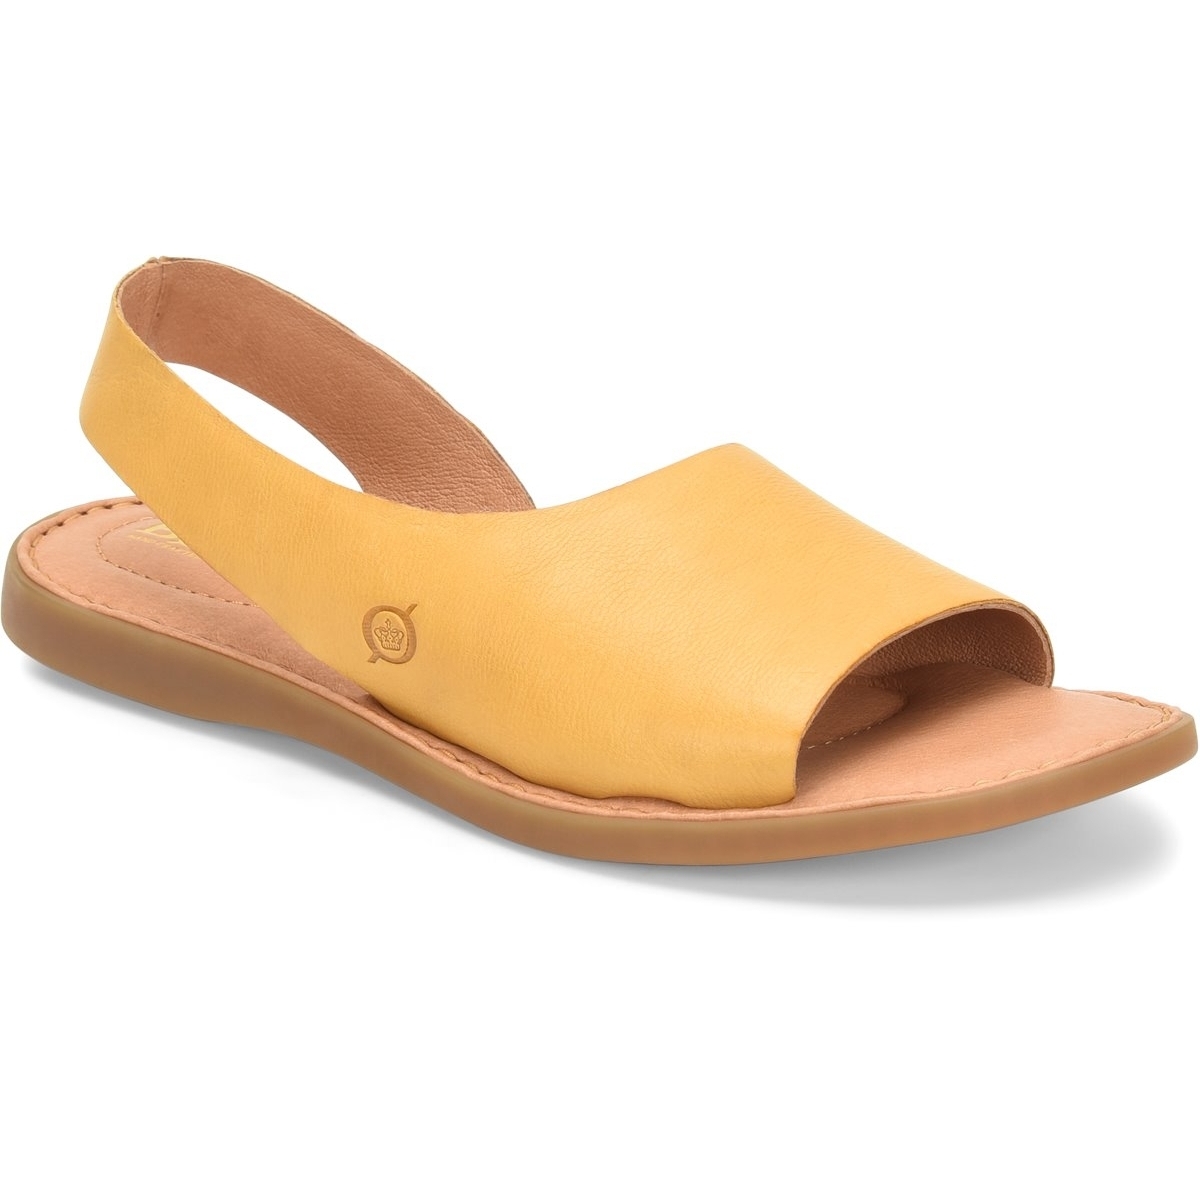 Born Women's Inlet Sandal Orca (Yellow) - BR0002292 YELLOW - YELLOW, 7